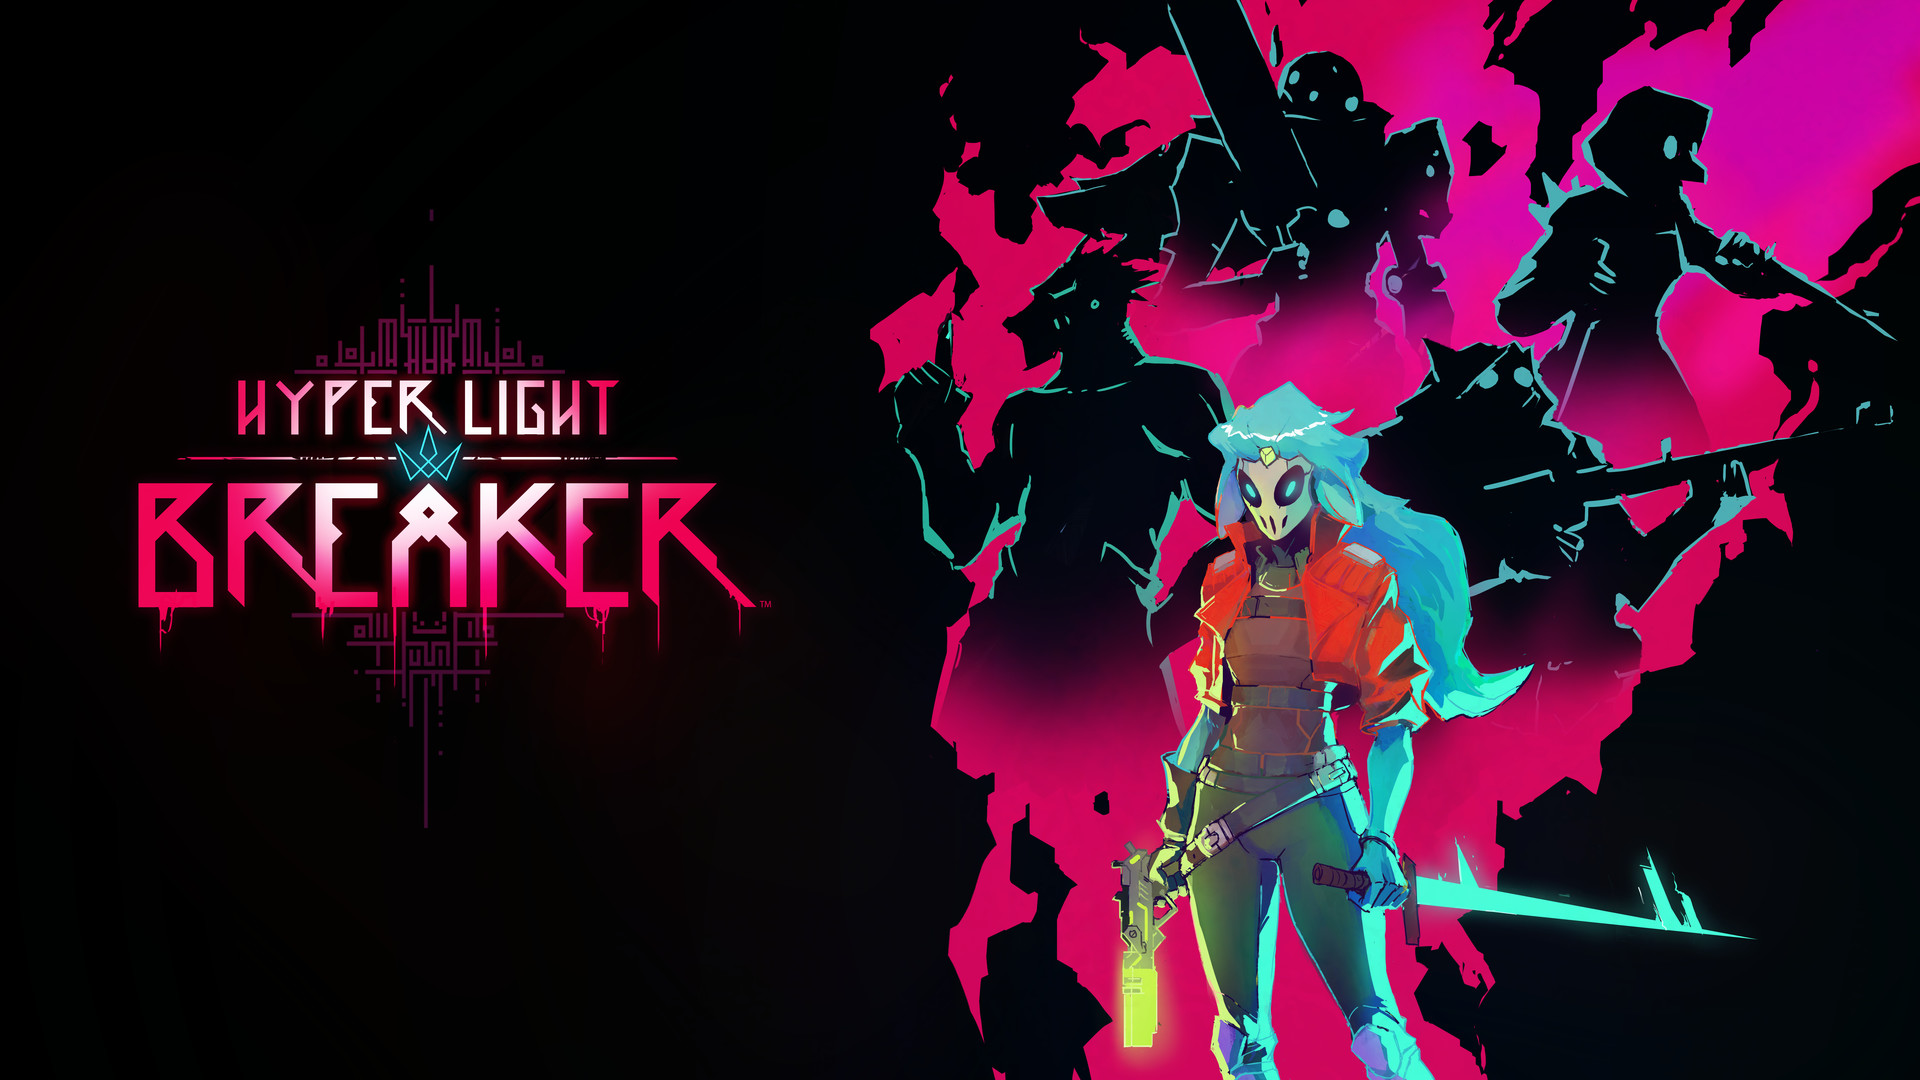 Hyper Light Breaker no Steam